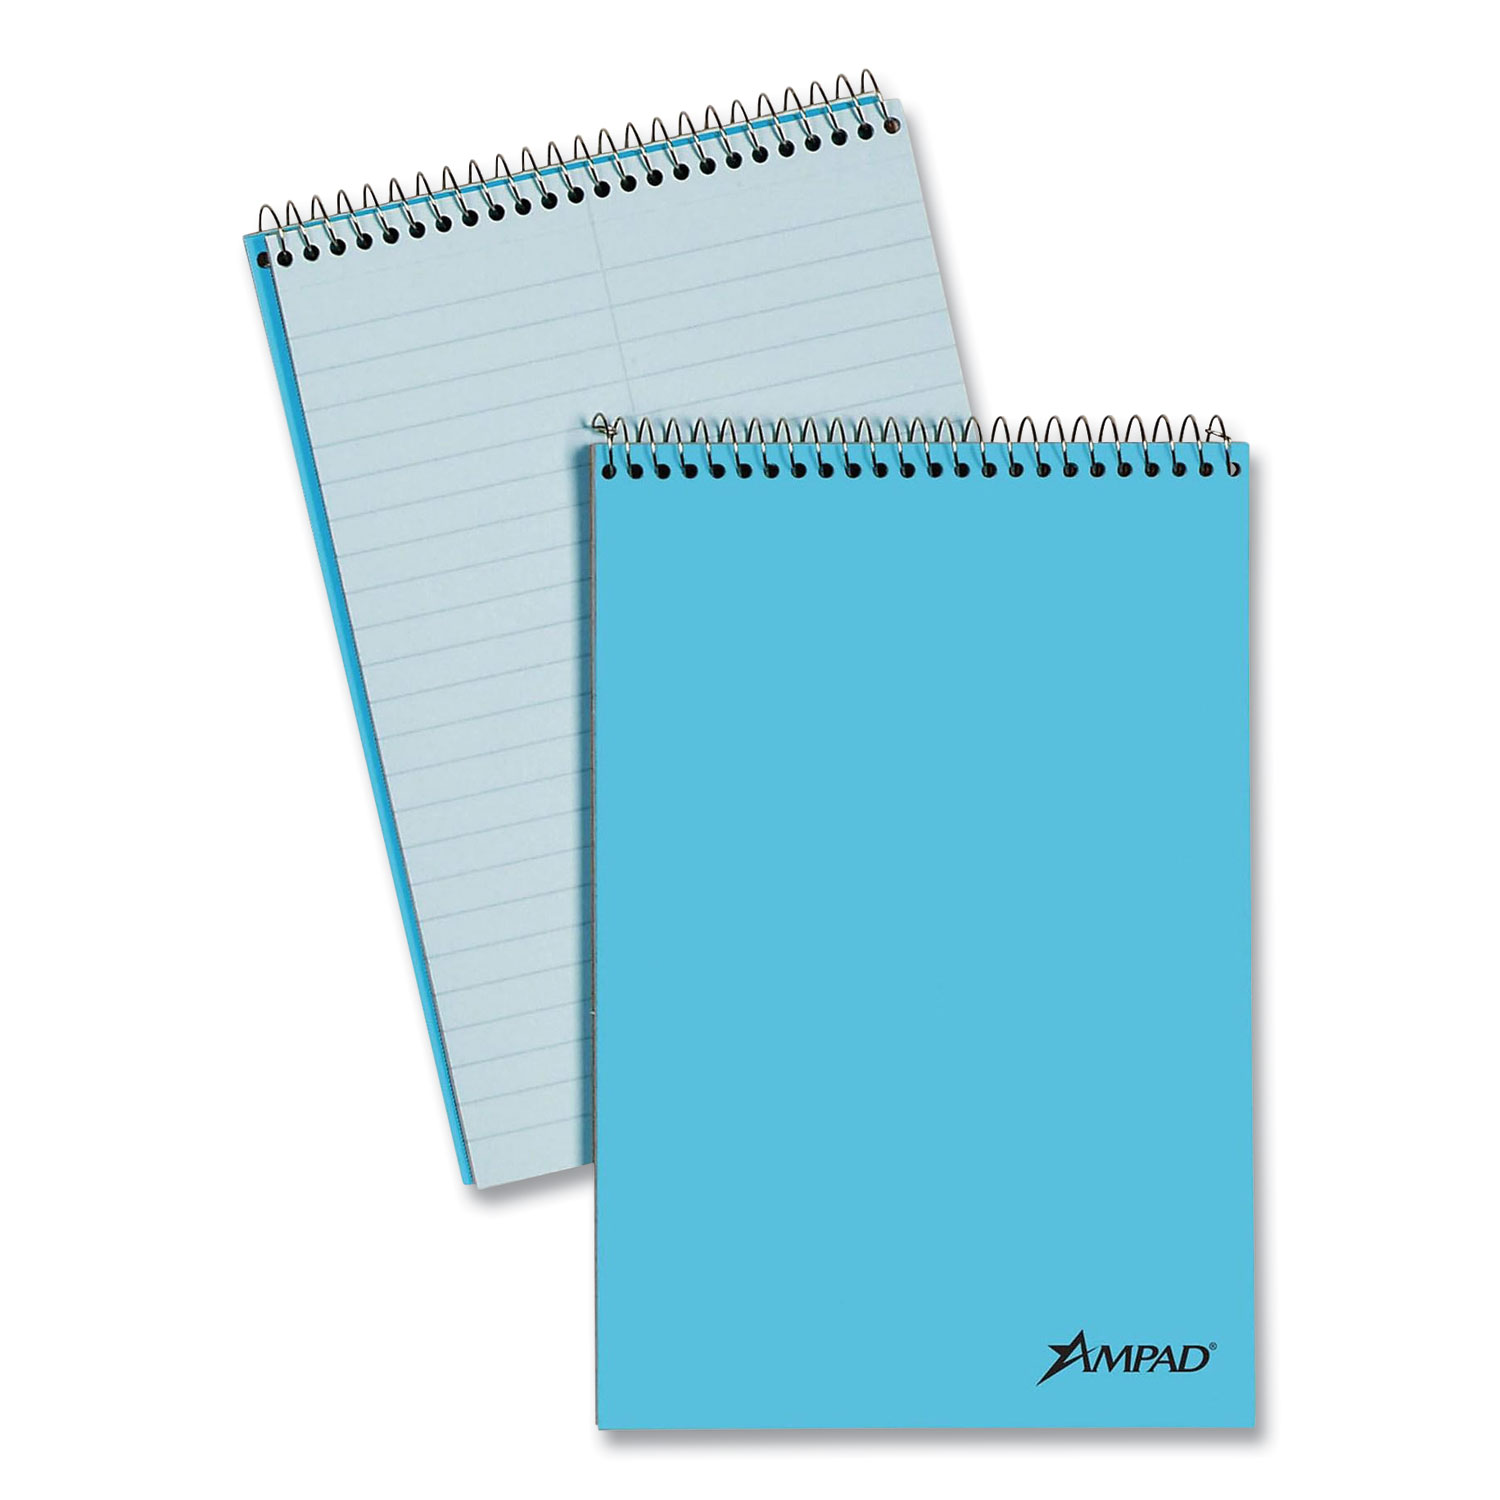 Ampad® Steno Books, Pitman Rule, Blue Cover, 6 x 9, 80 Green Tint Sheets